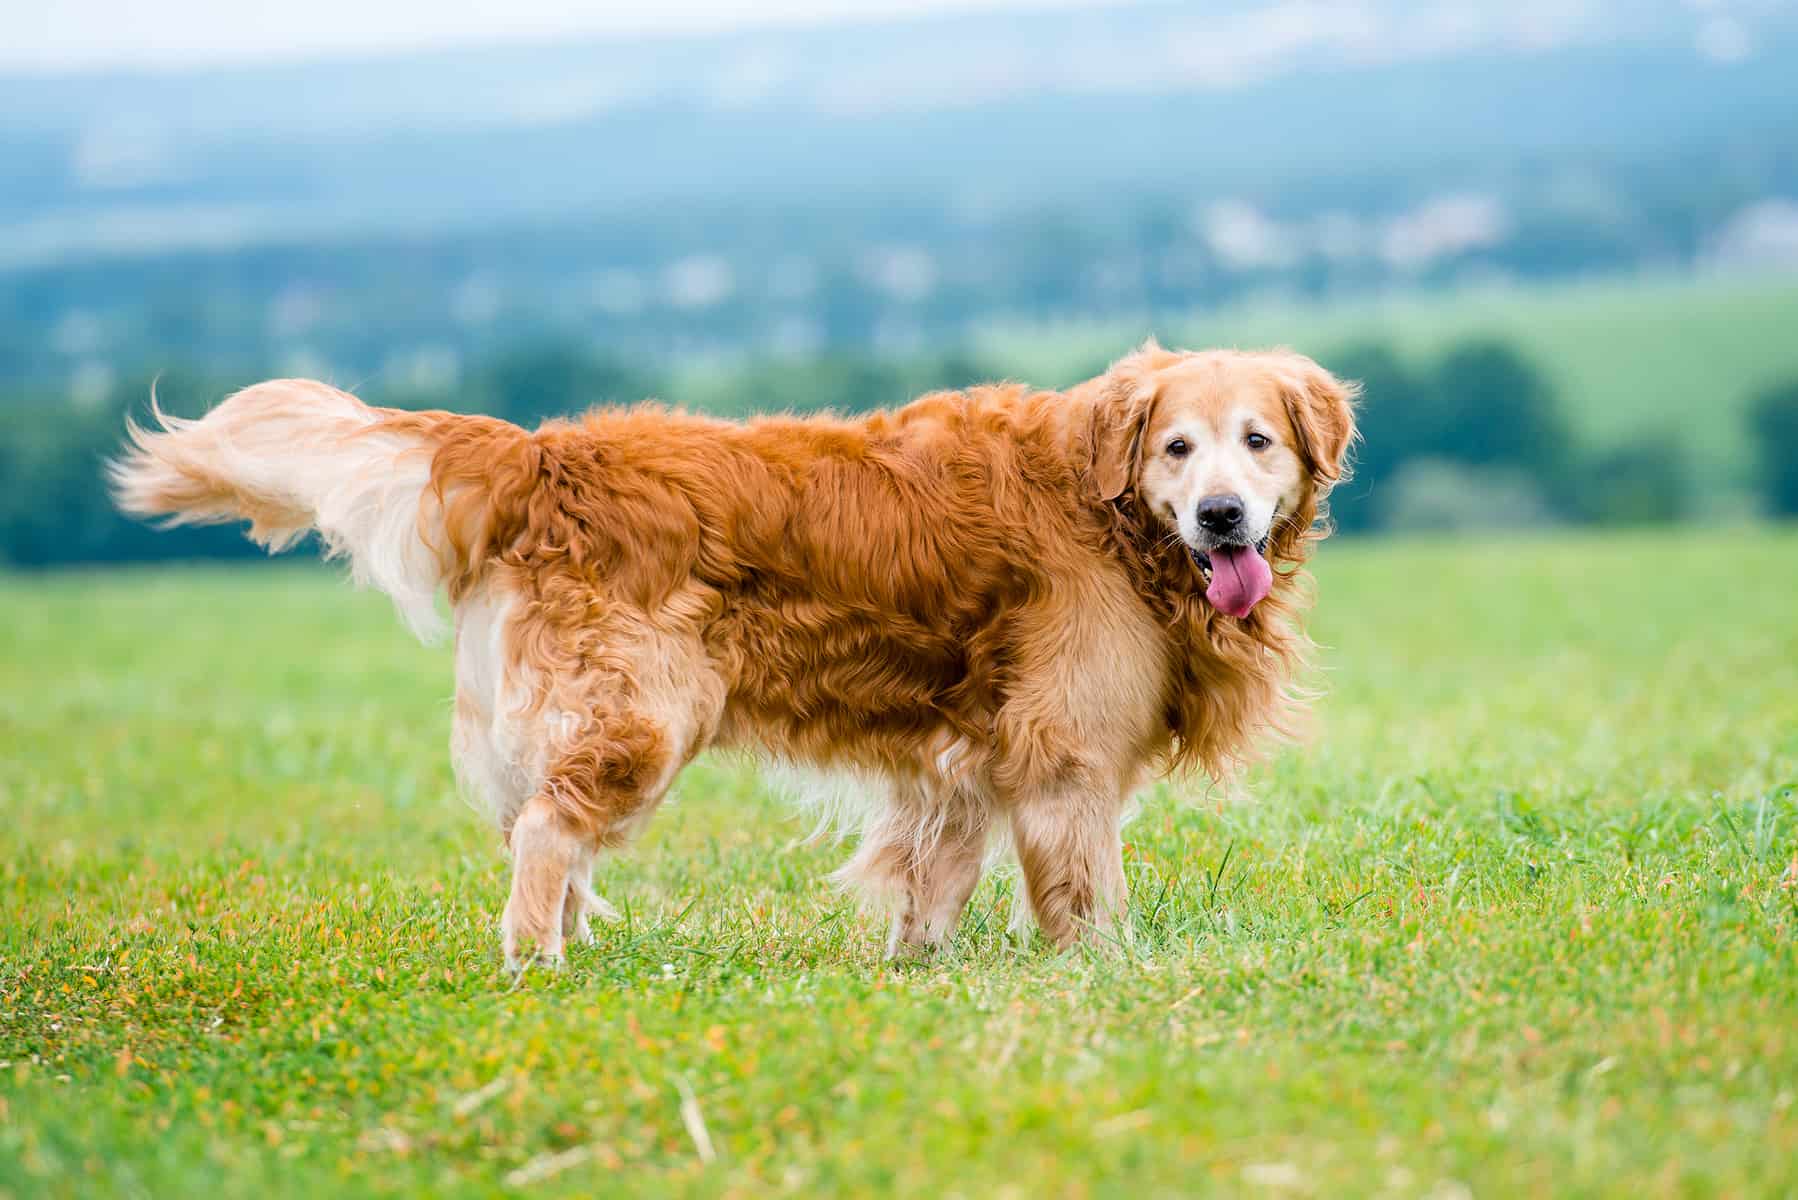 beautiful dog breed golden retriever lying in the field